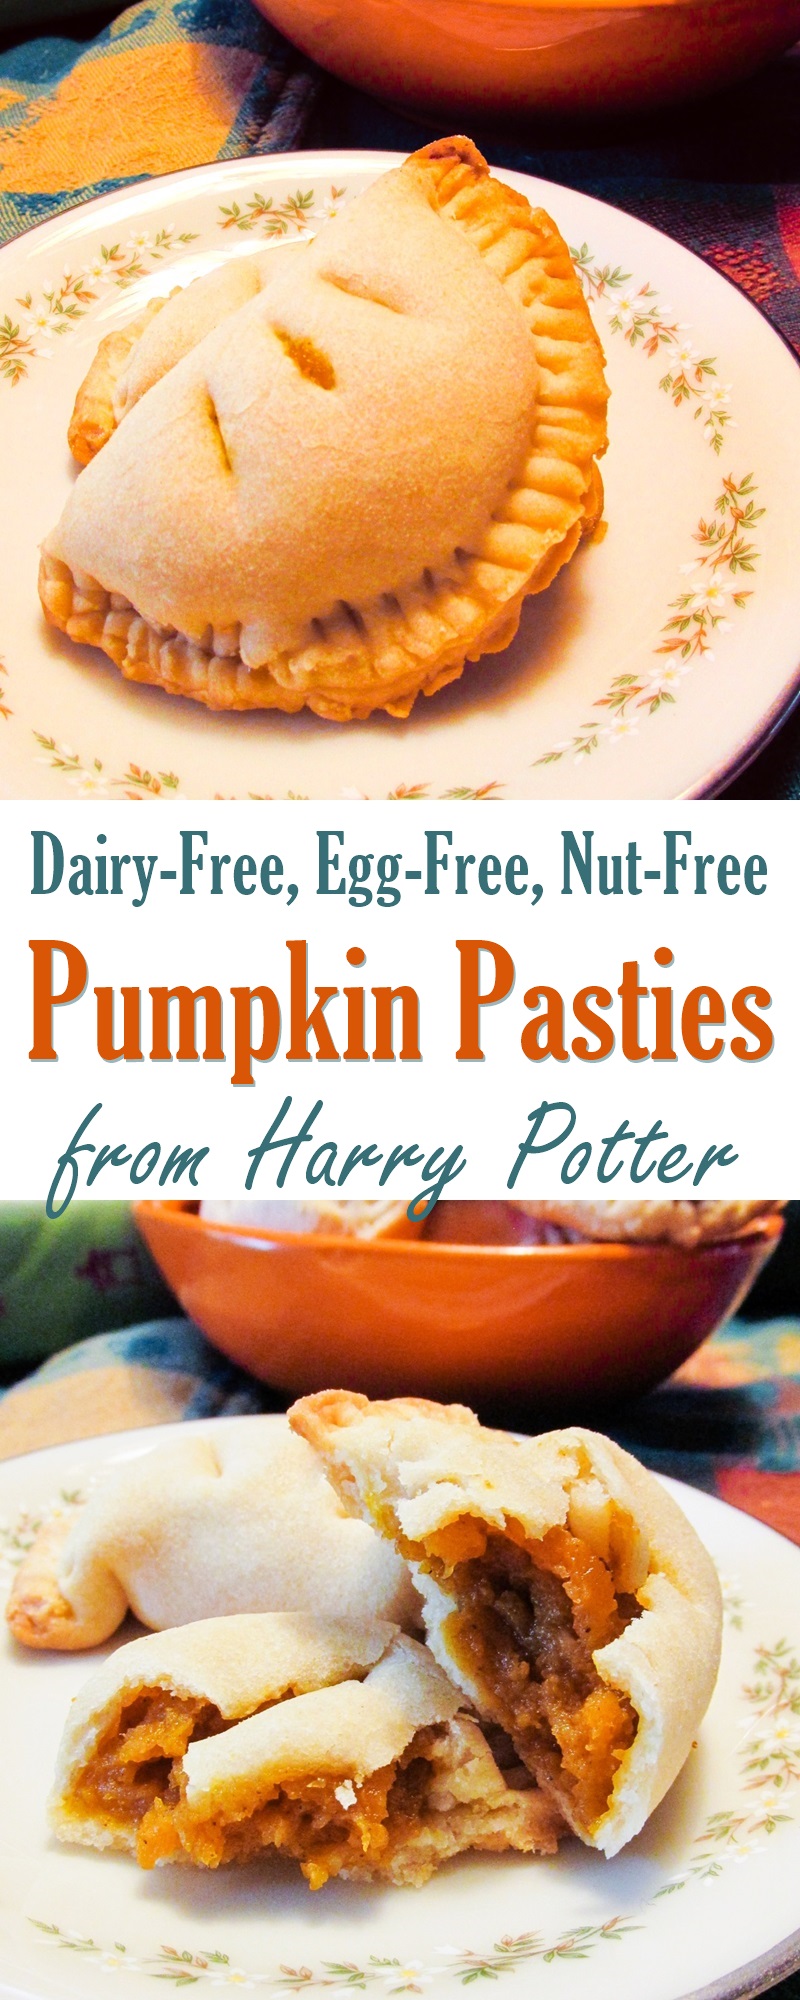 Vegan Pumpkin Pasties Recipe - Dairy-free version of a Harry Potter favorite!